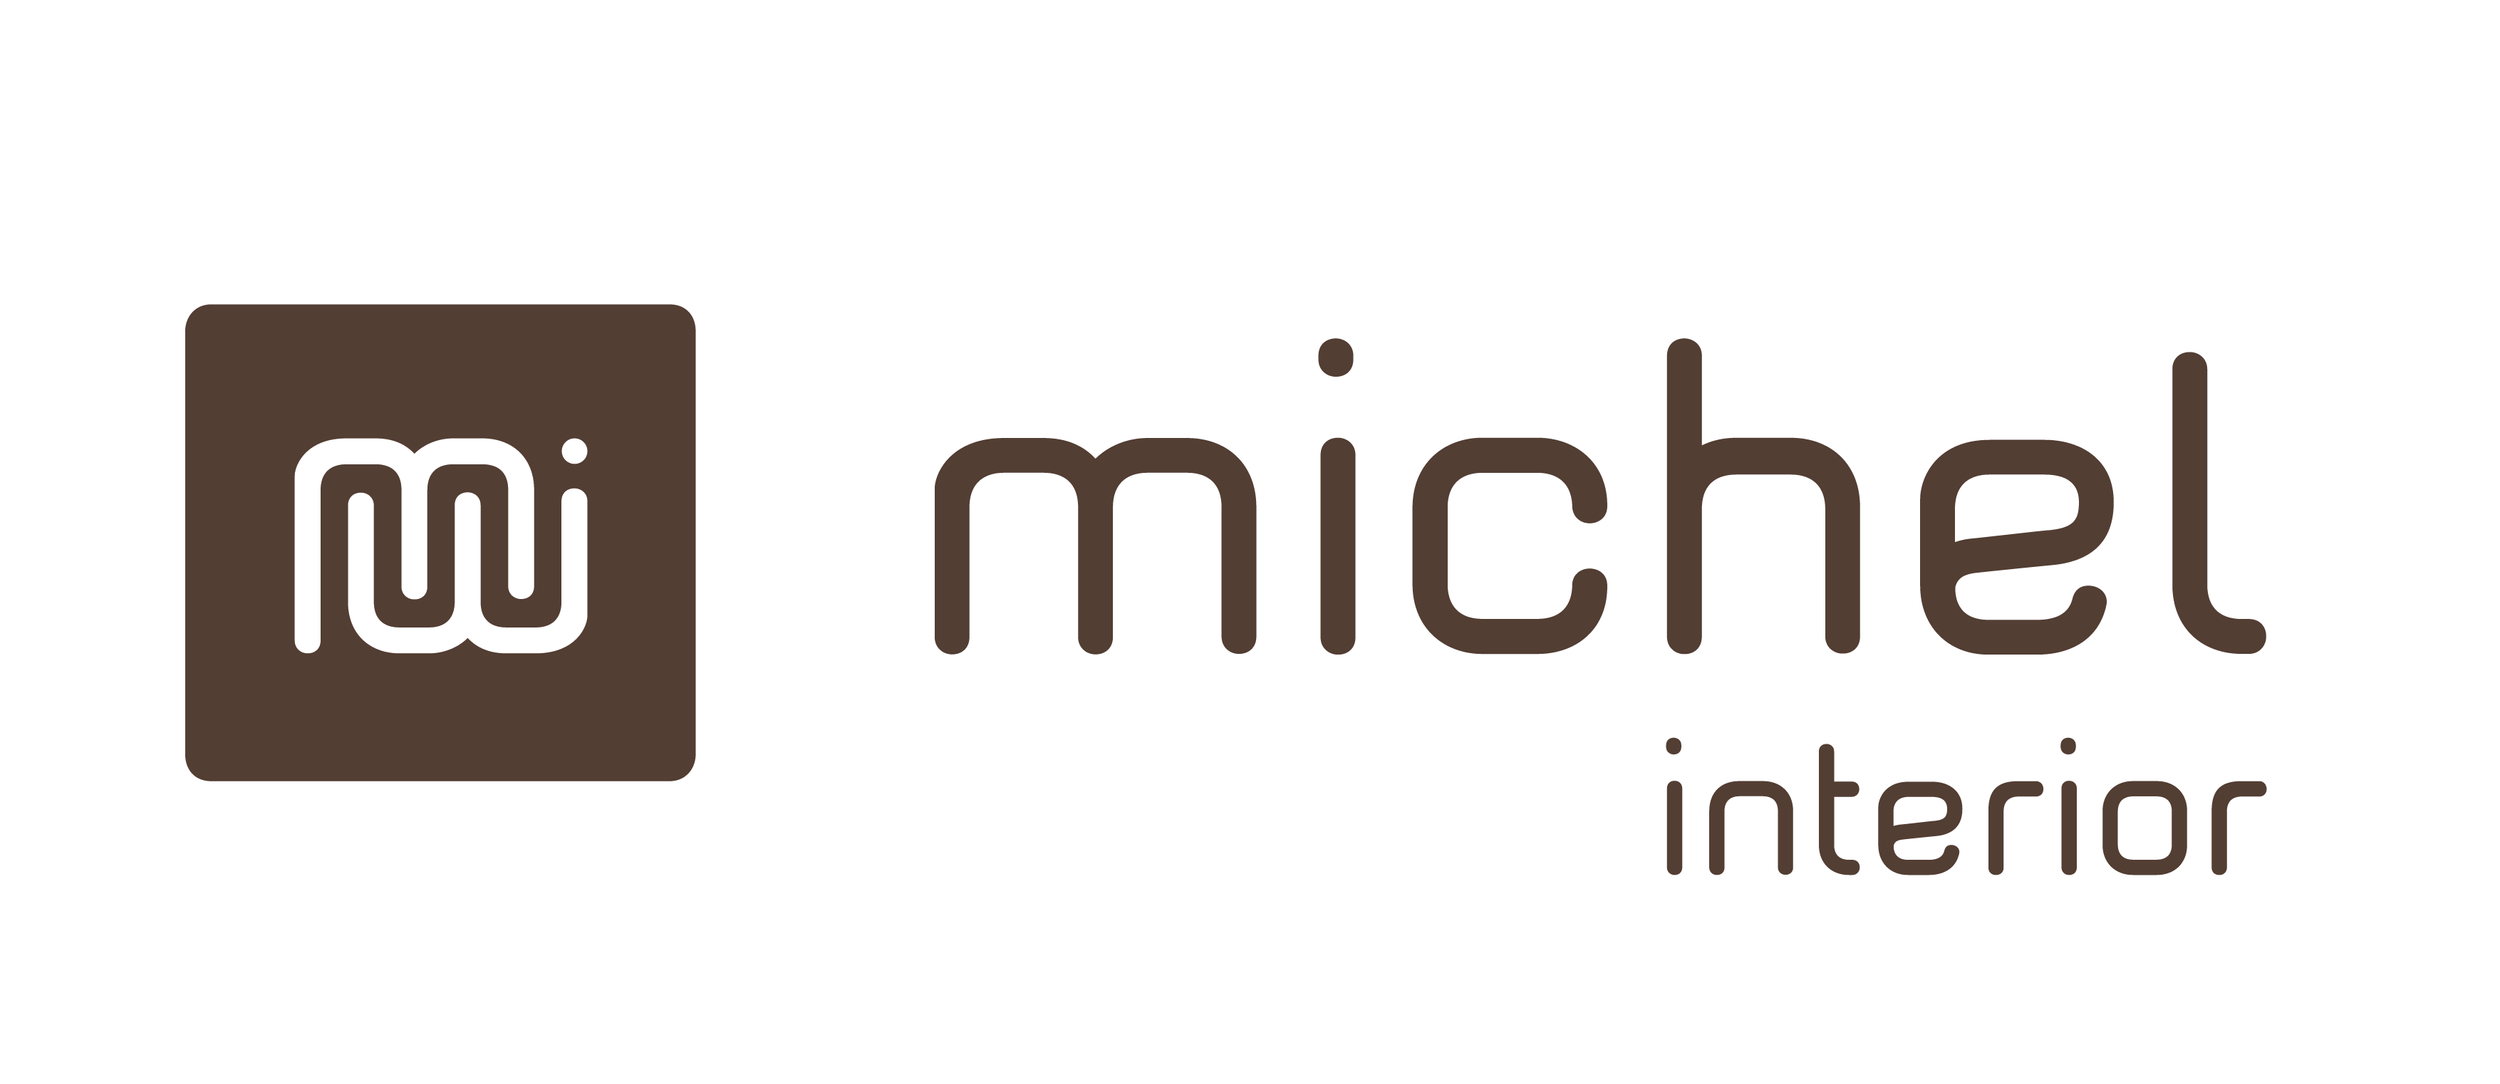 michel_logo-01.png